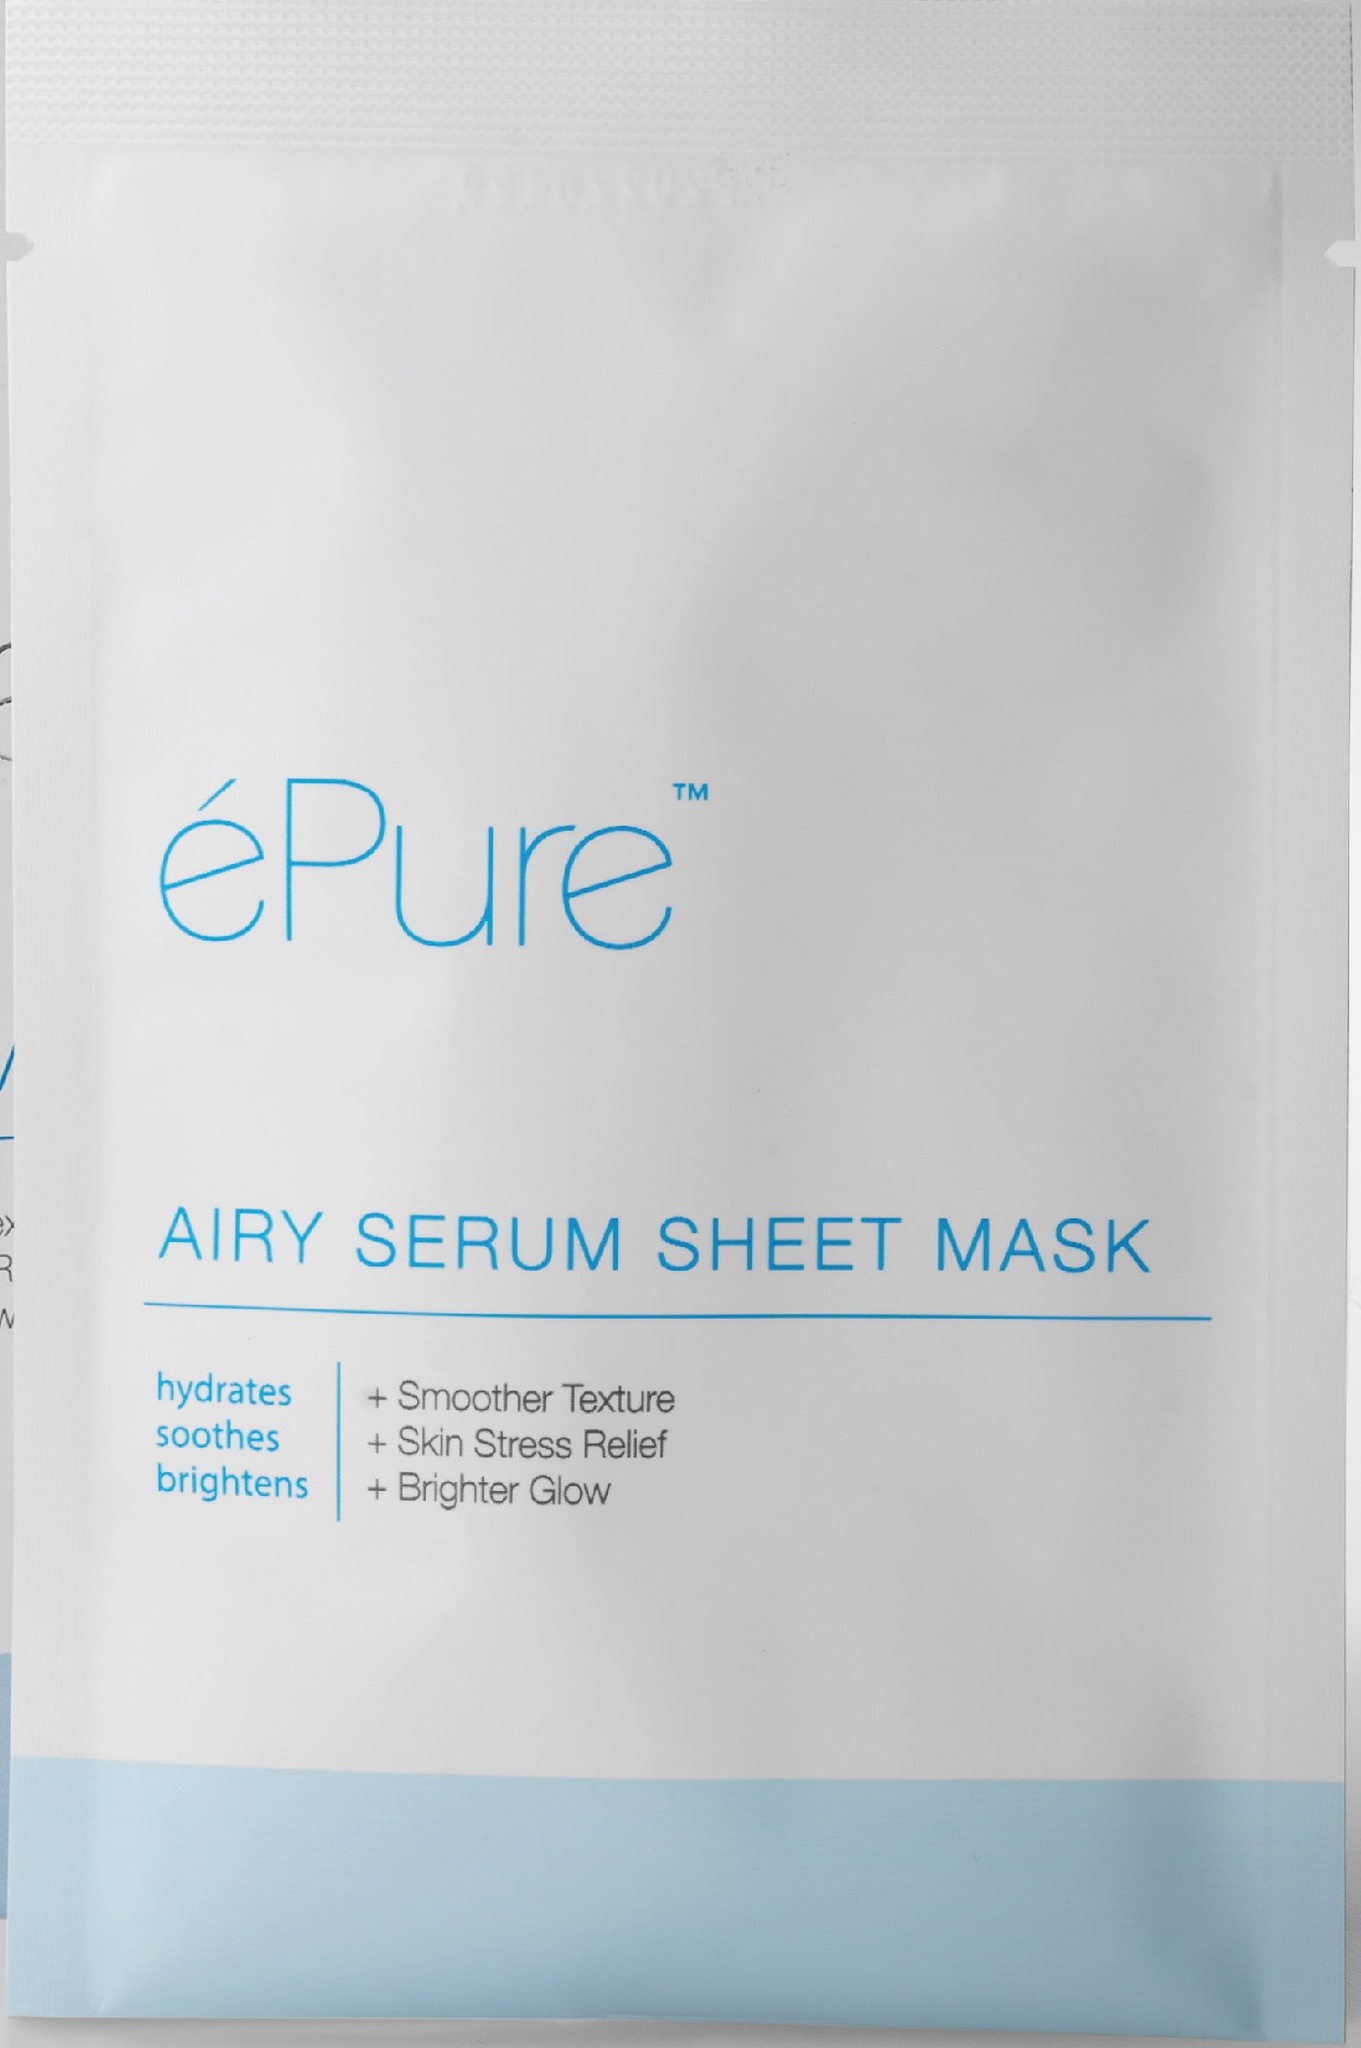 epure Airy Serum Sheet Mask